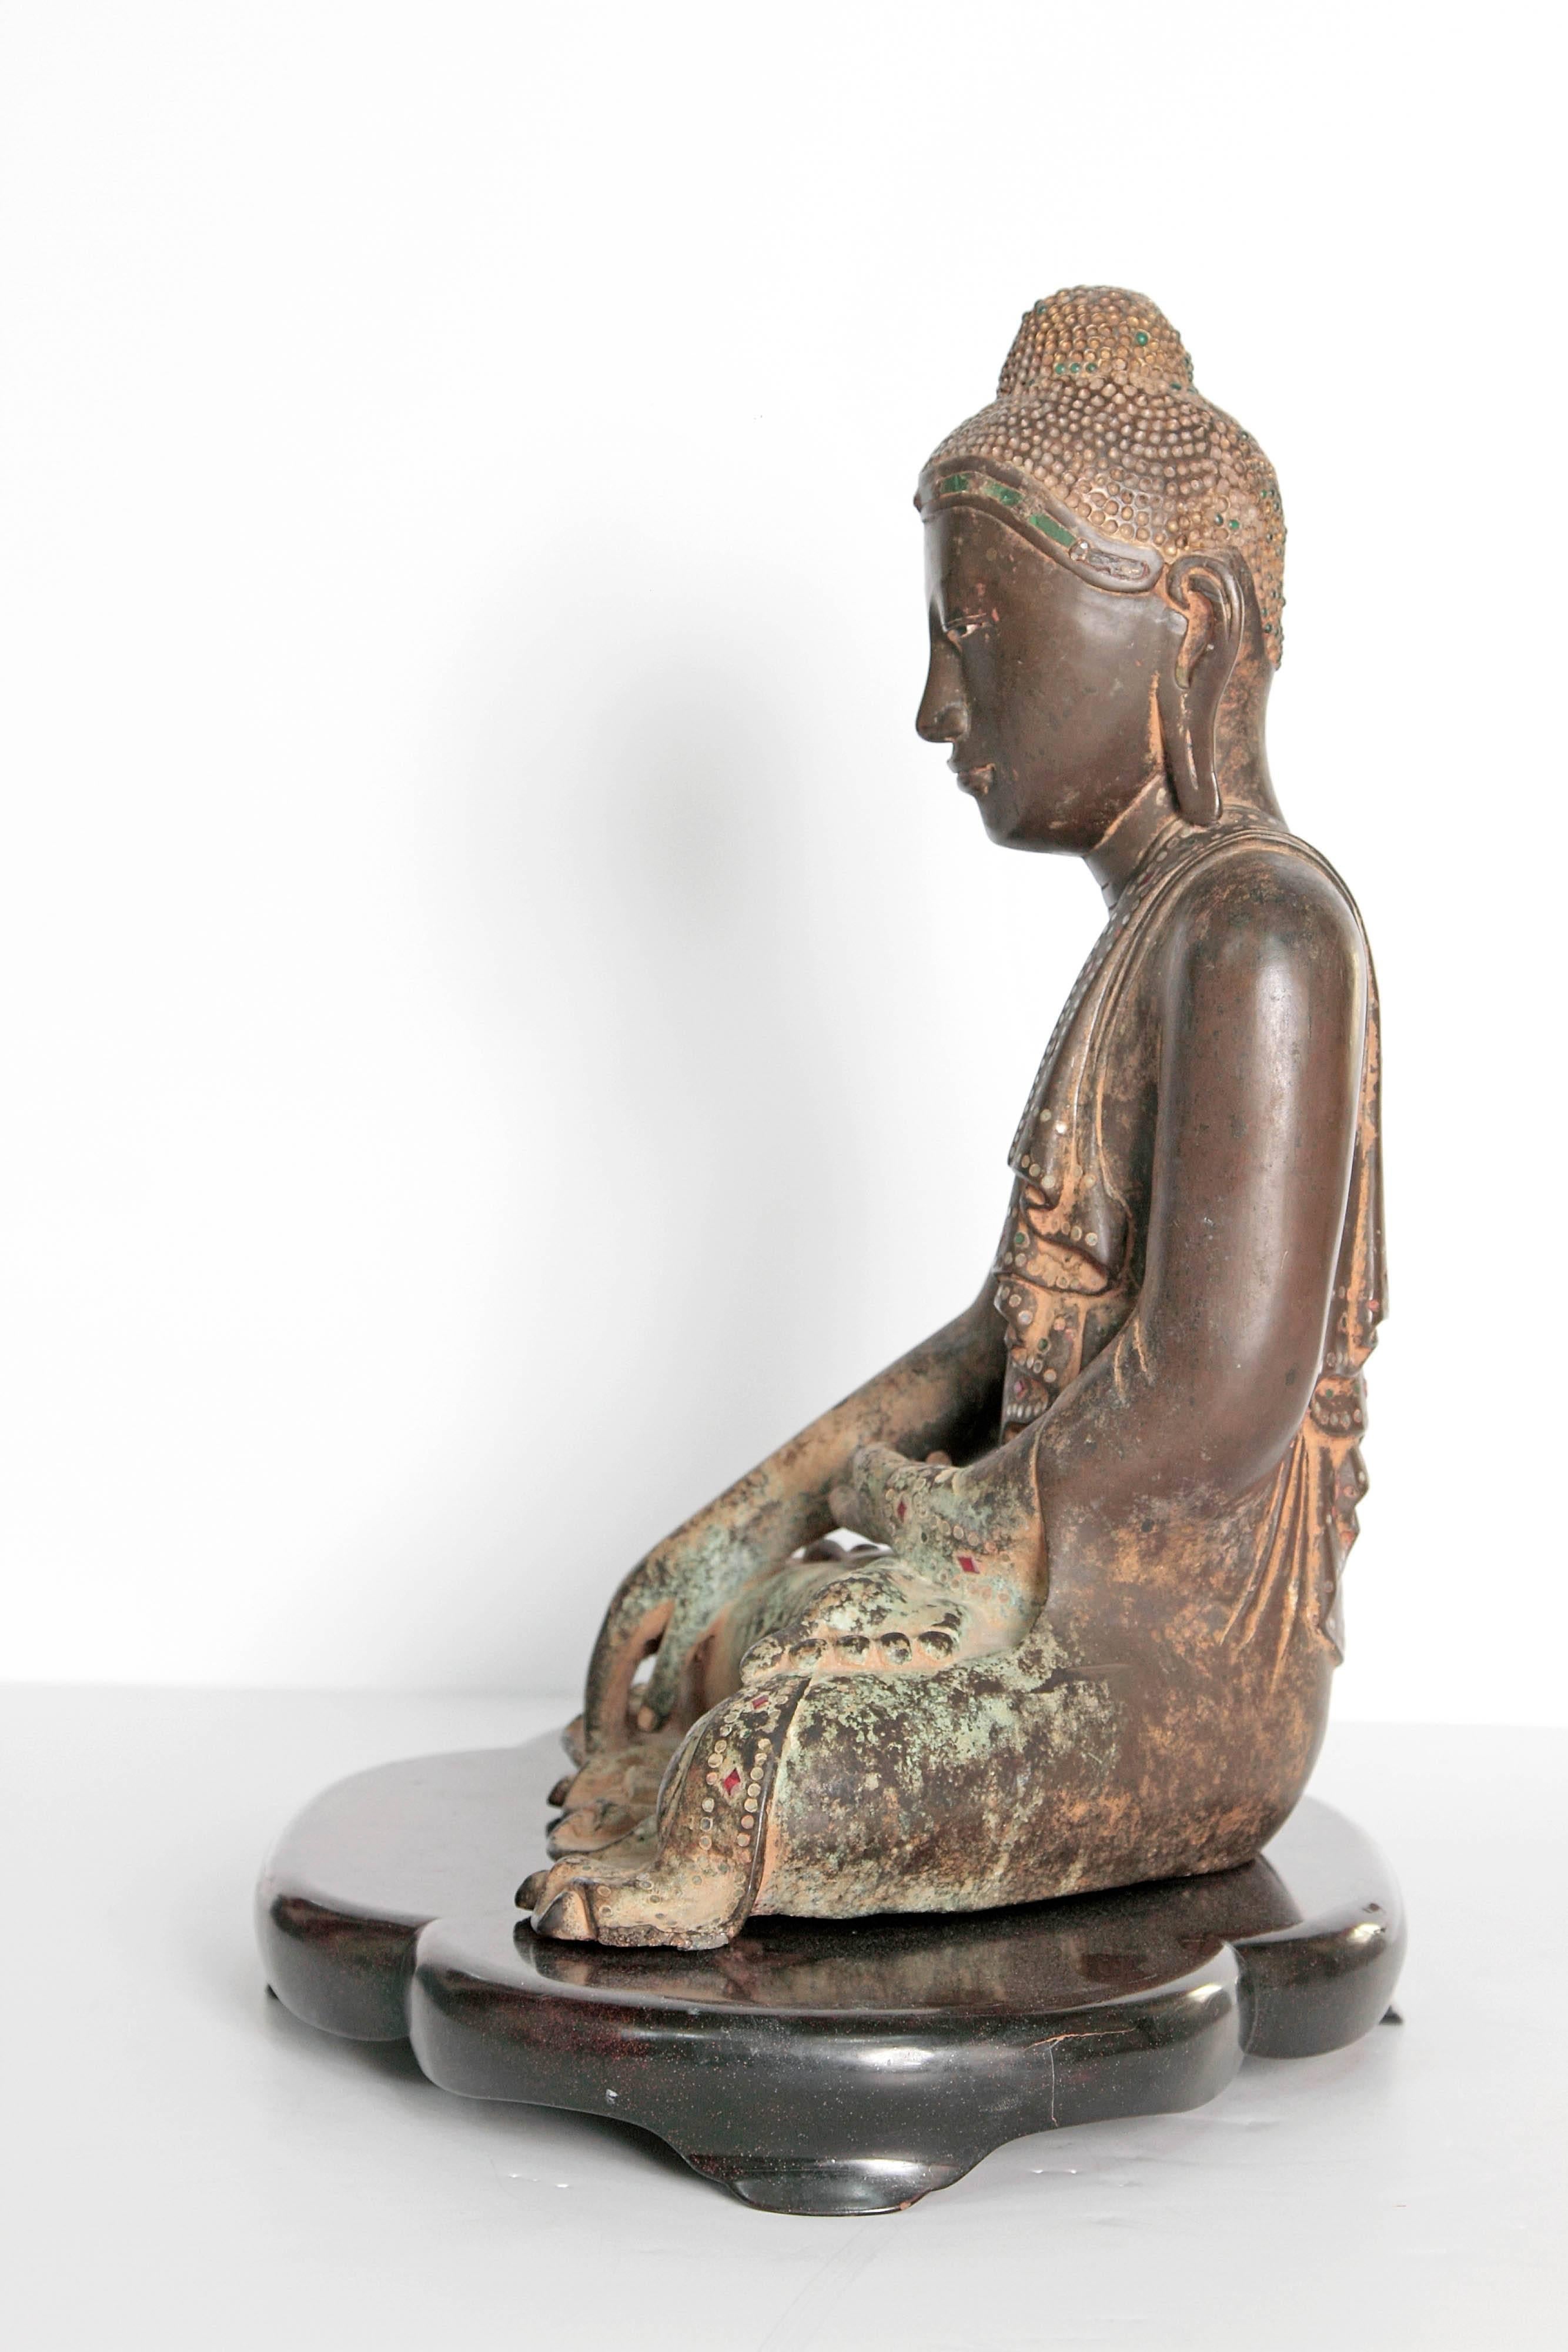 Burmese 19th Century Mandalay Style Buddha of Bronze with Verdigris